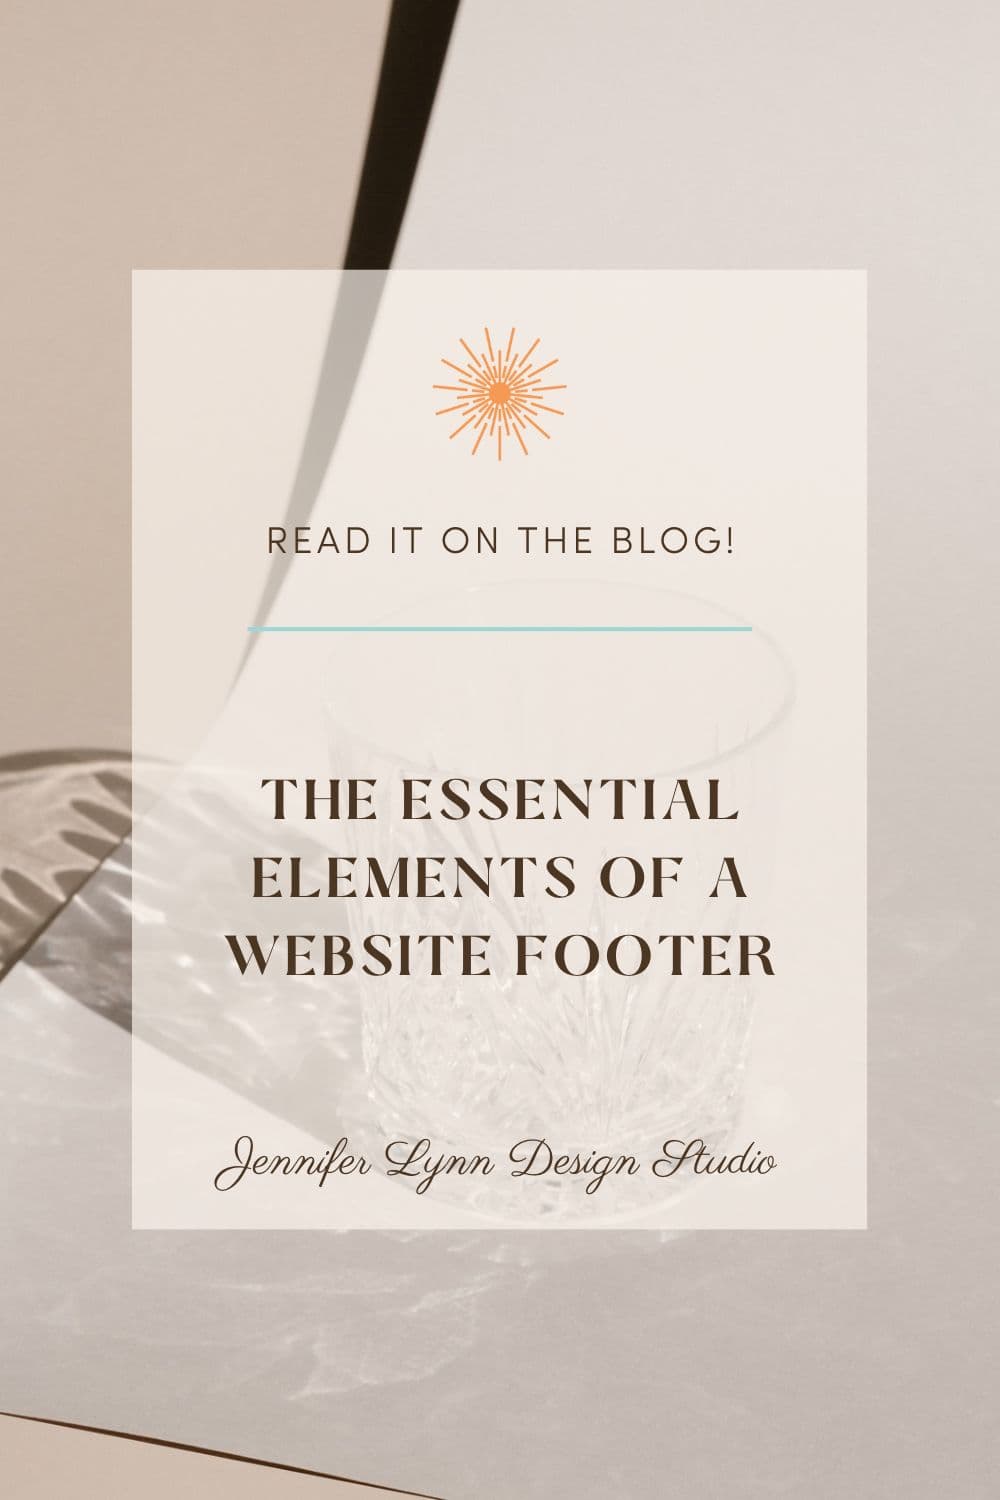 The Essential Elements of a Website Footer by Jennifer Lynn Design Studio